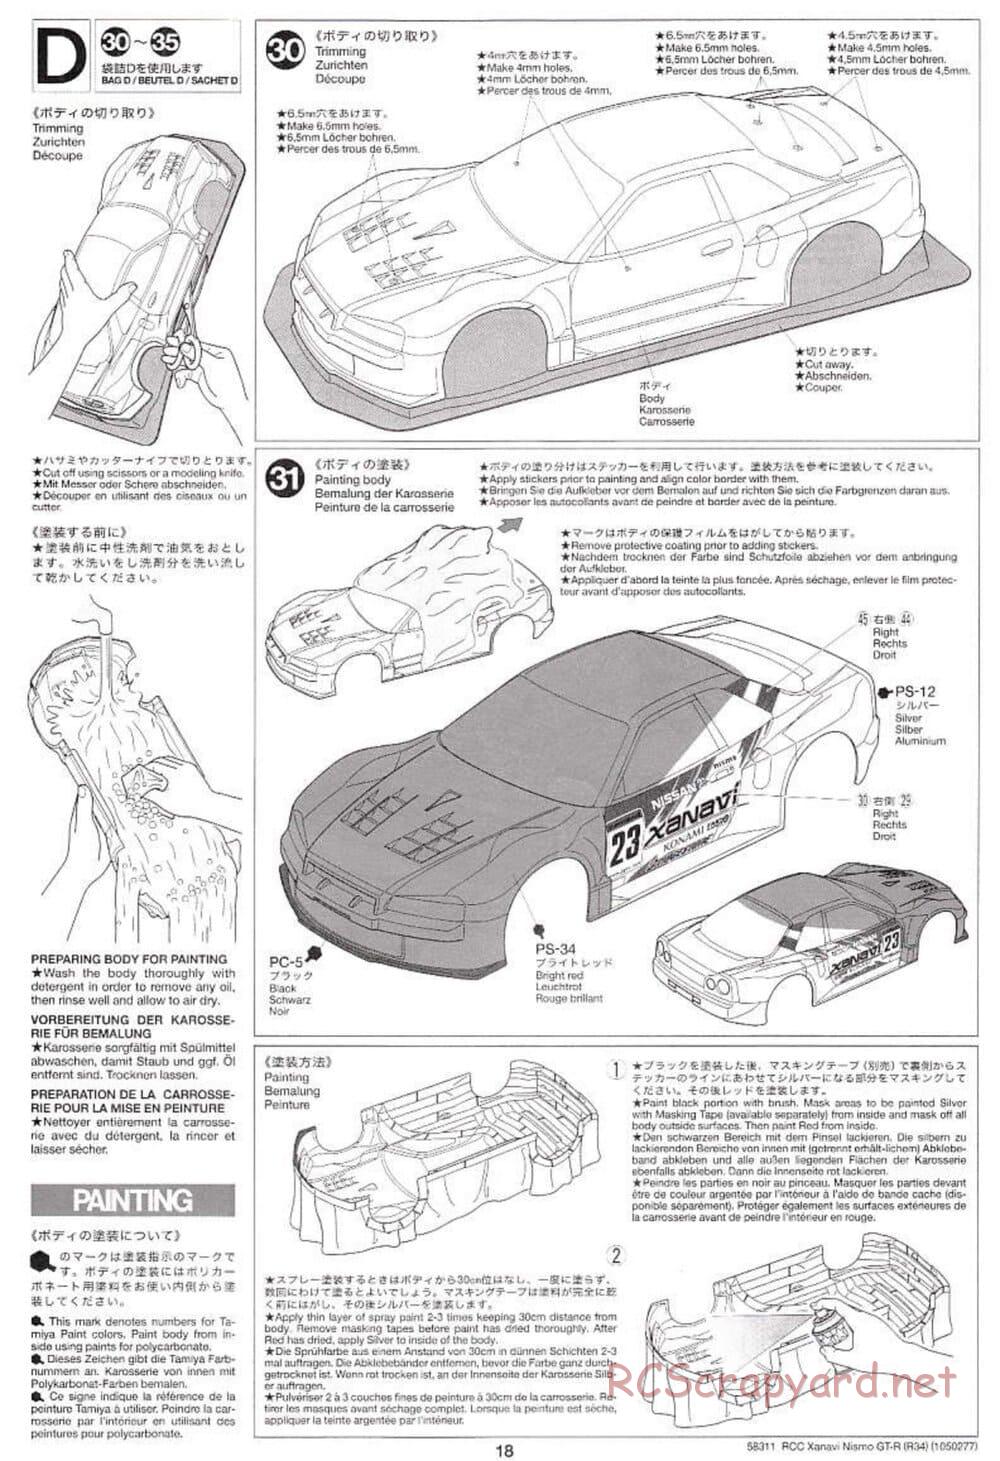 Tamiya - Xanavi Nismo GT-R (R34) - TB-02 Chassis - Manual - Page 18